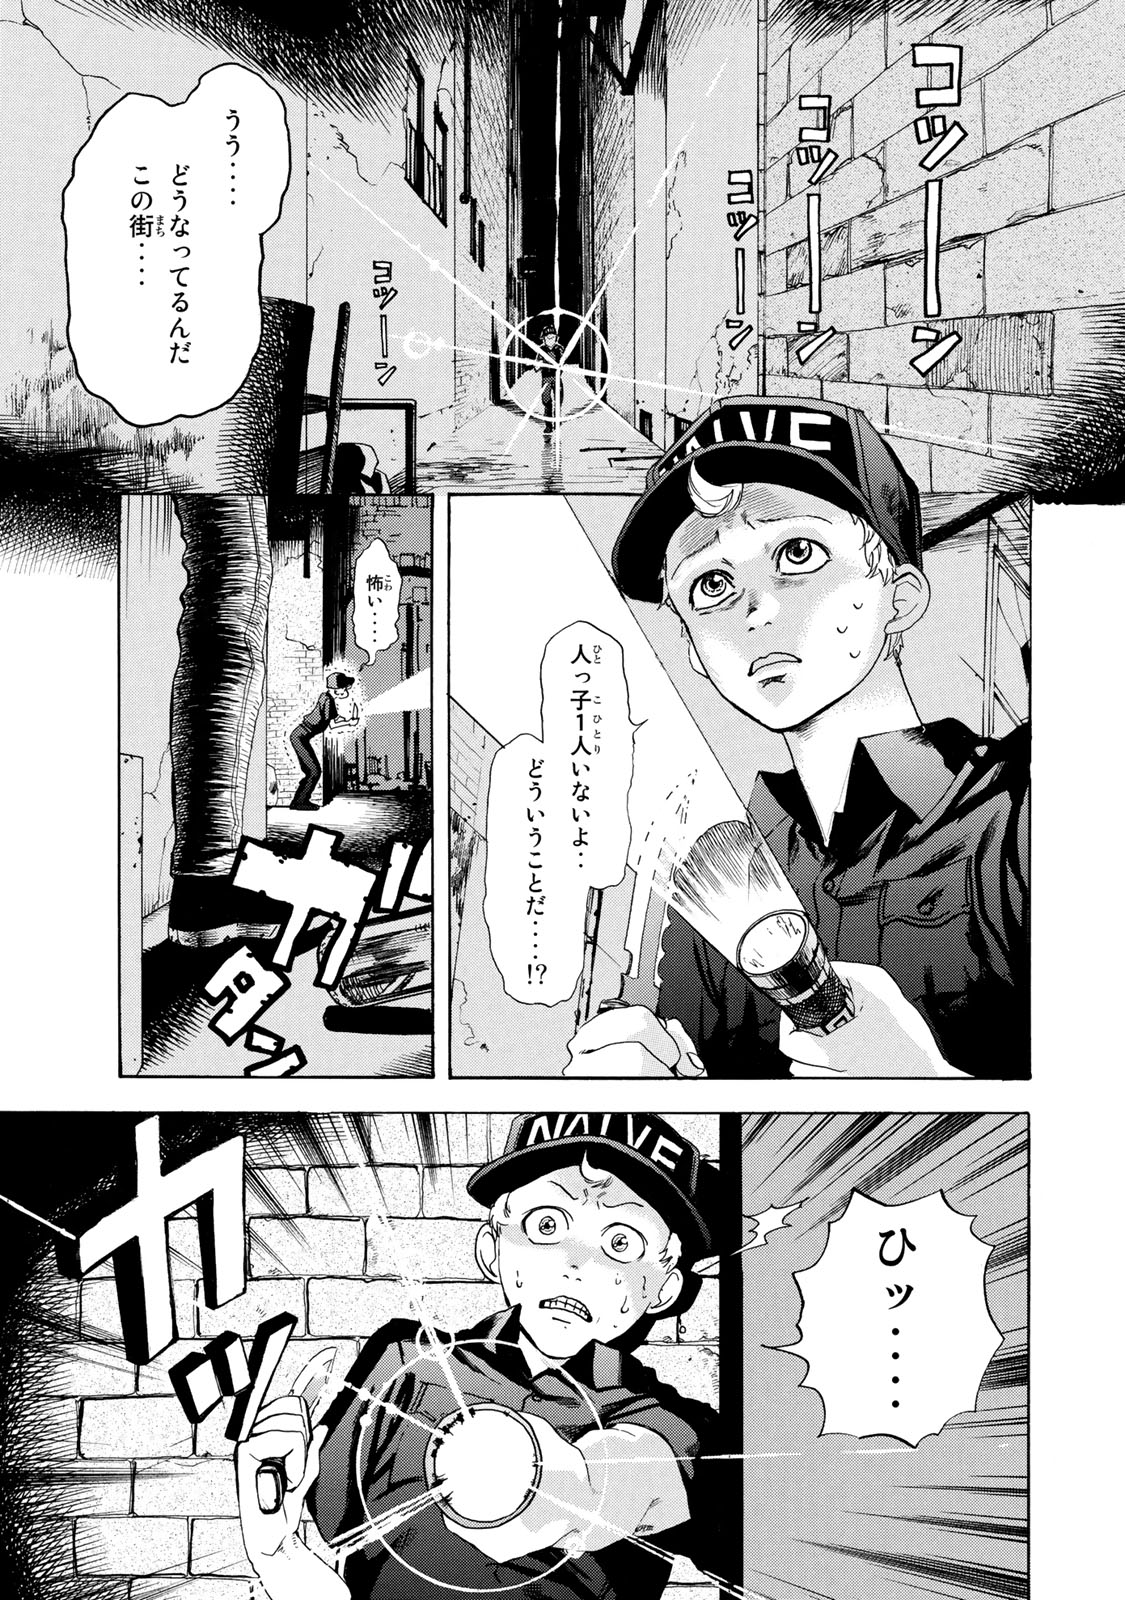 Hataraku Saibou - Chapter 3 - Page 1